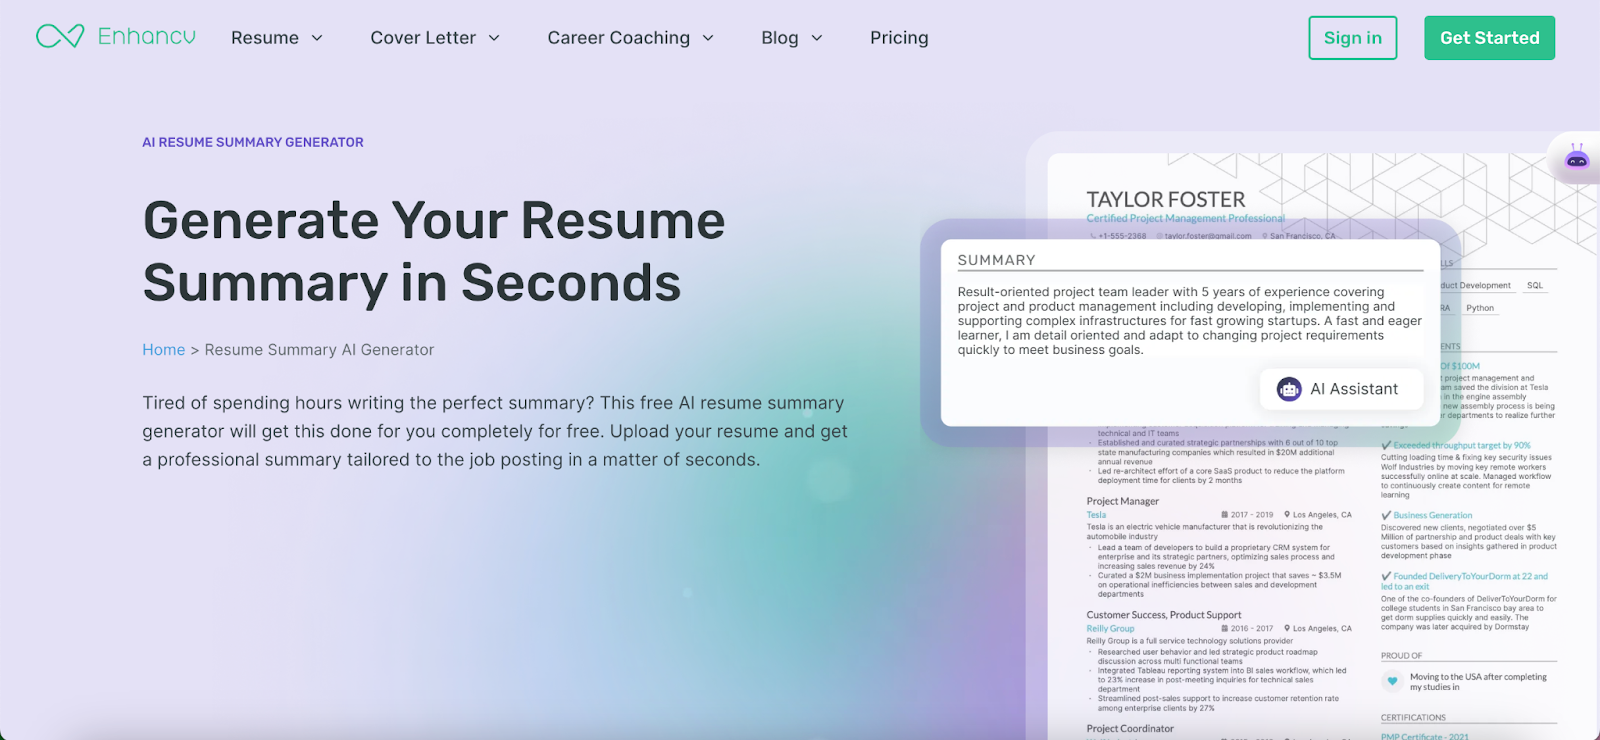 Top 10 Resume Summary Generators